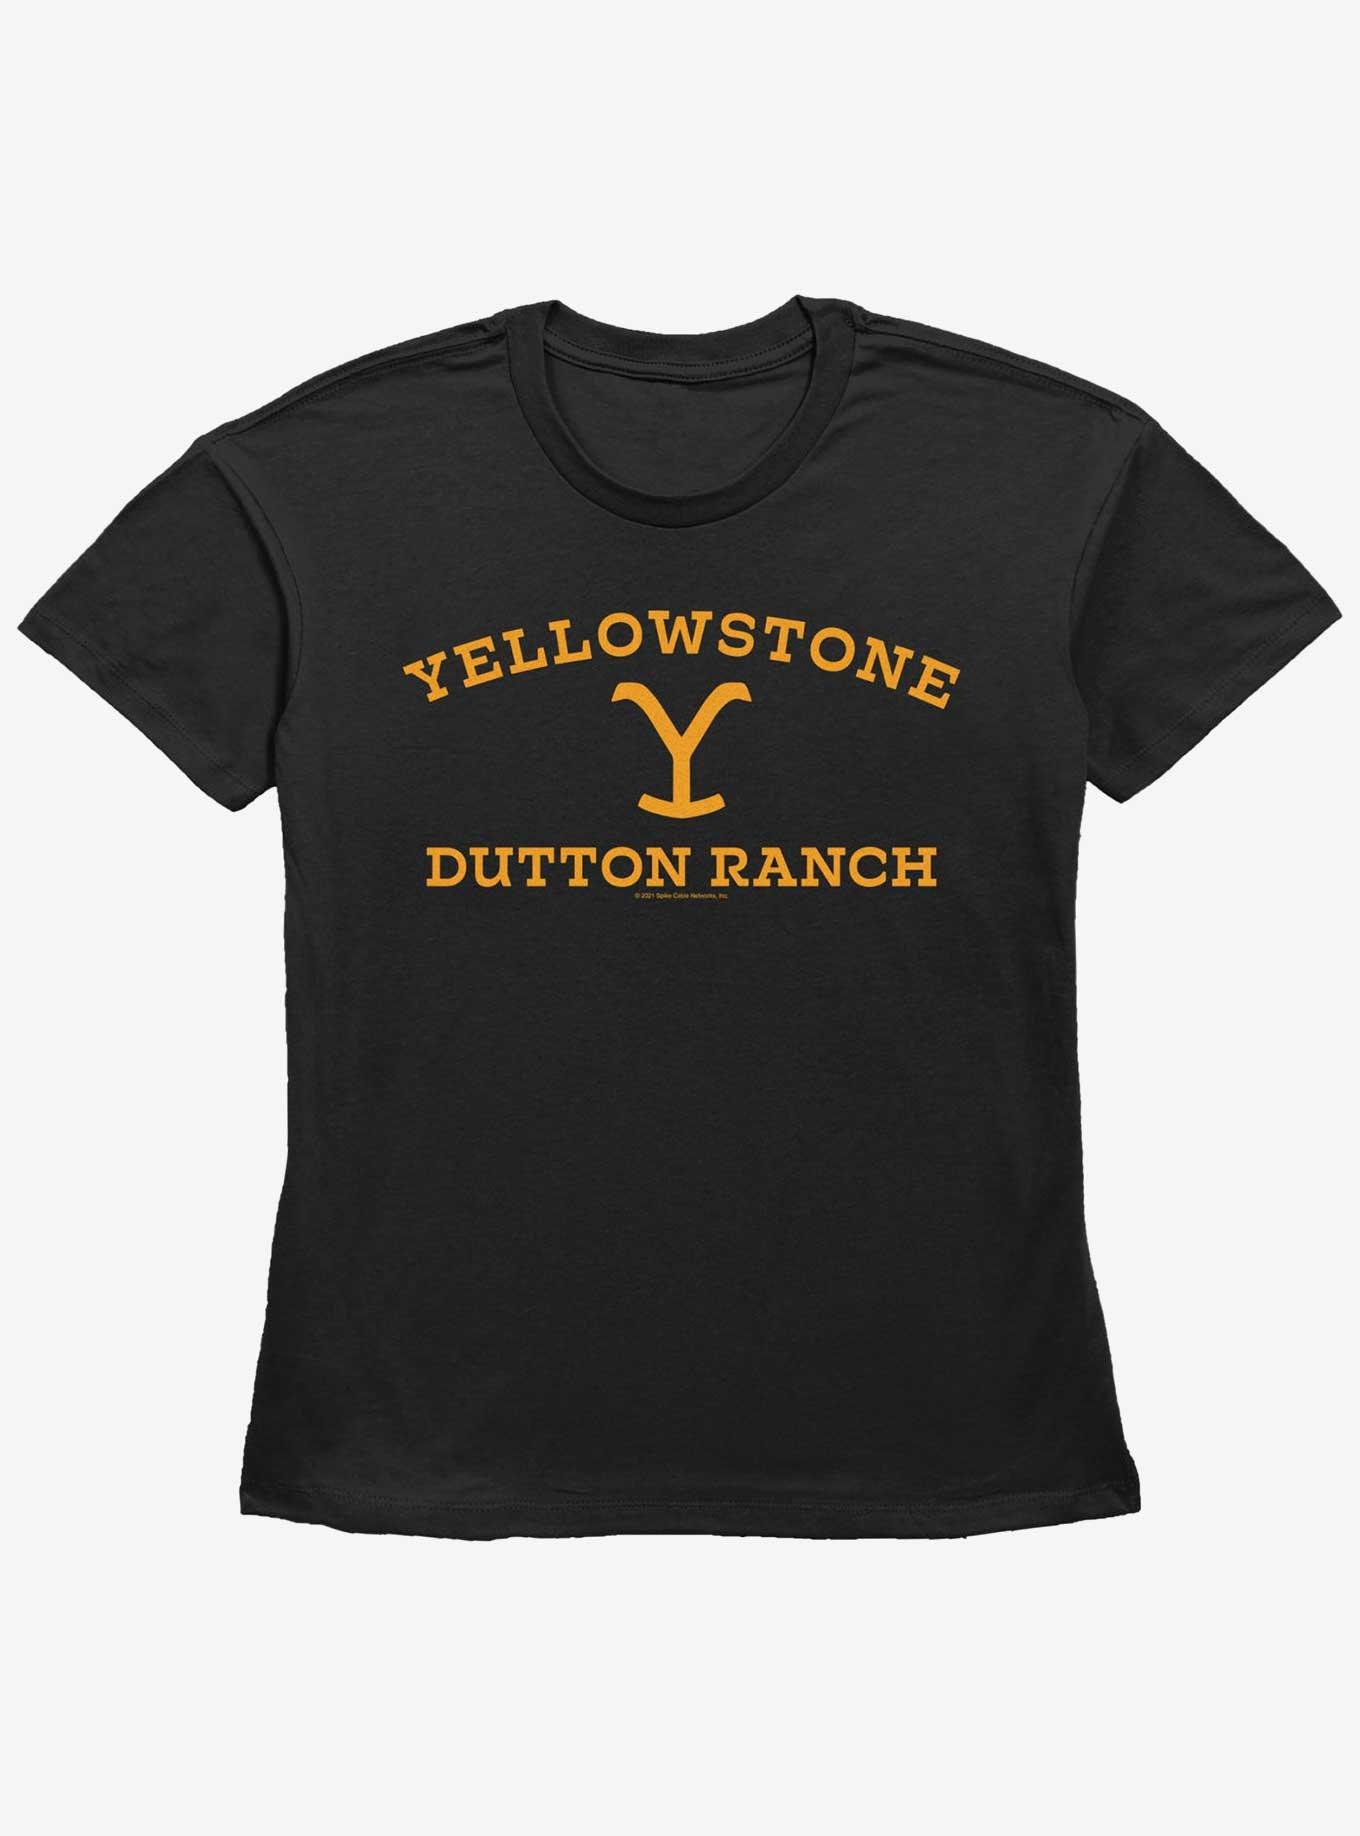 Yellowstone Dutton Ranch Logo Girls Straight Fit T-Shirt, BLACK, hi-res